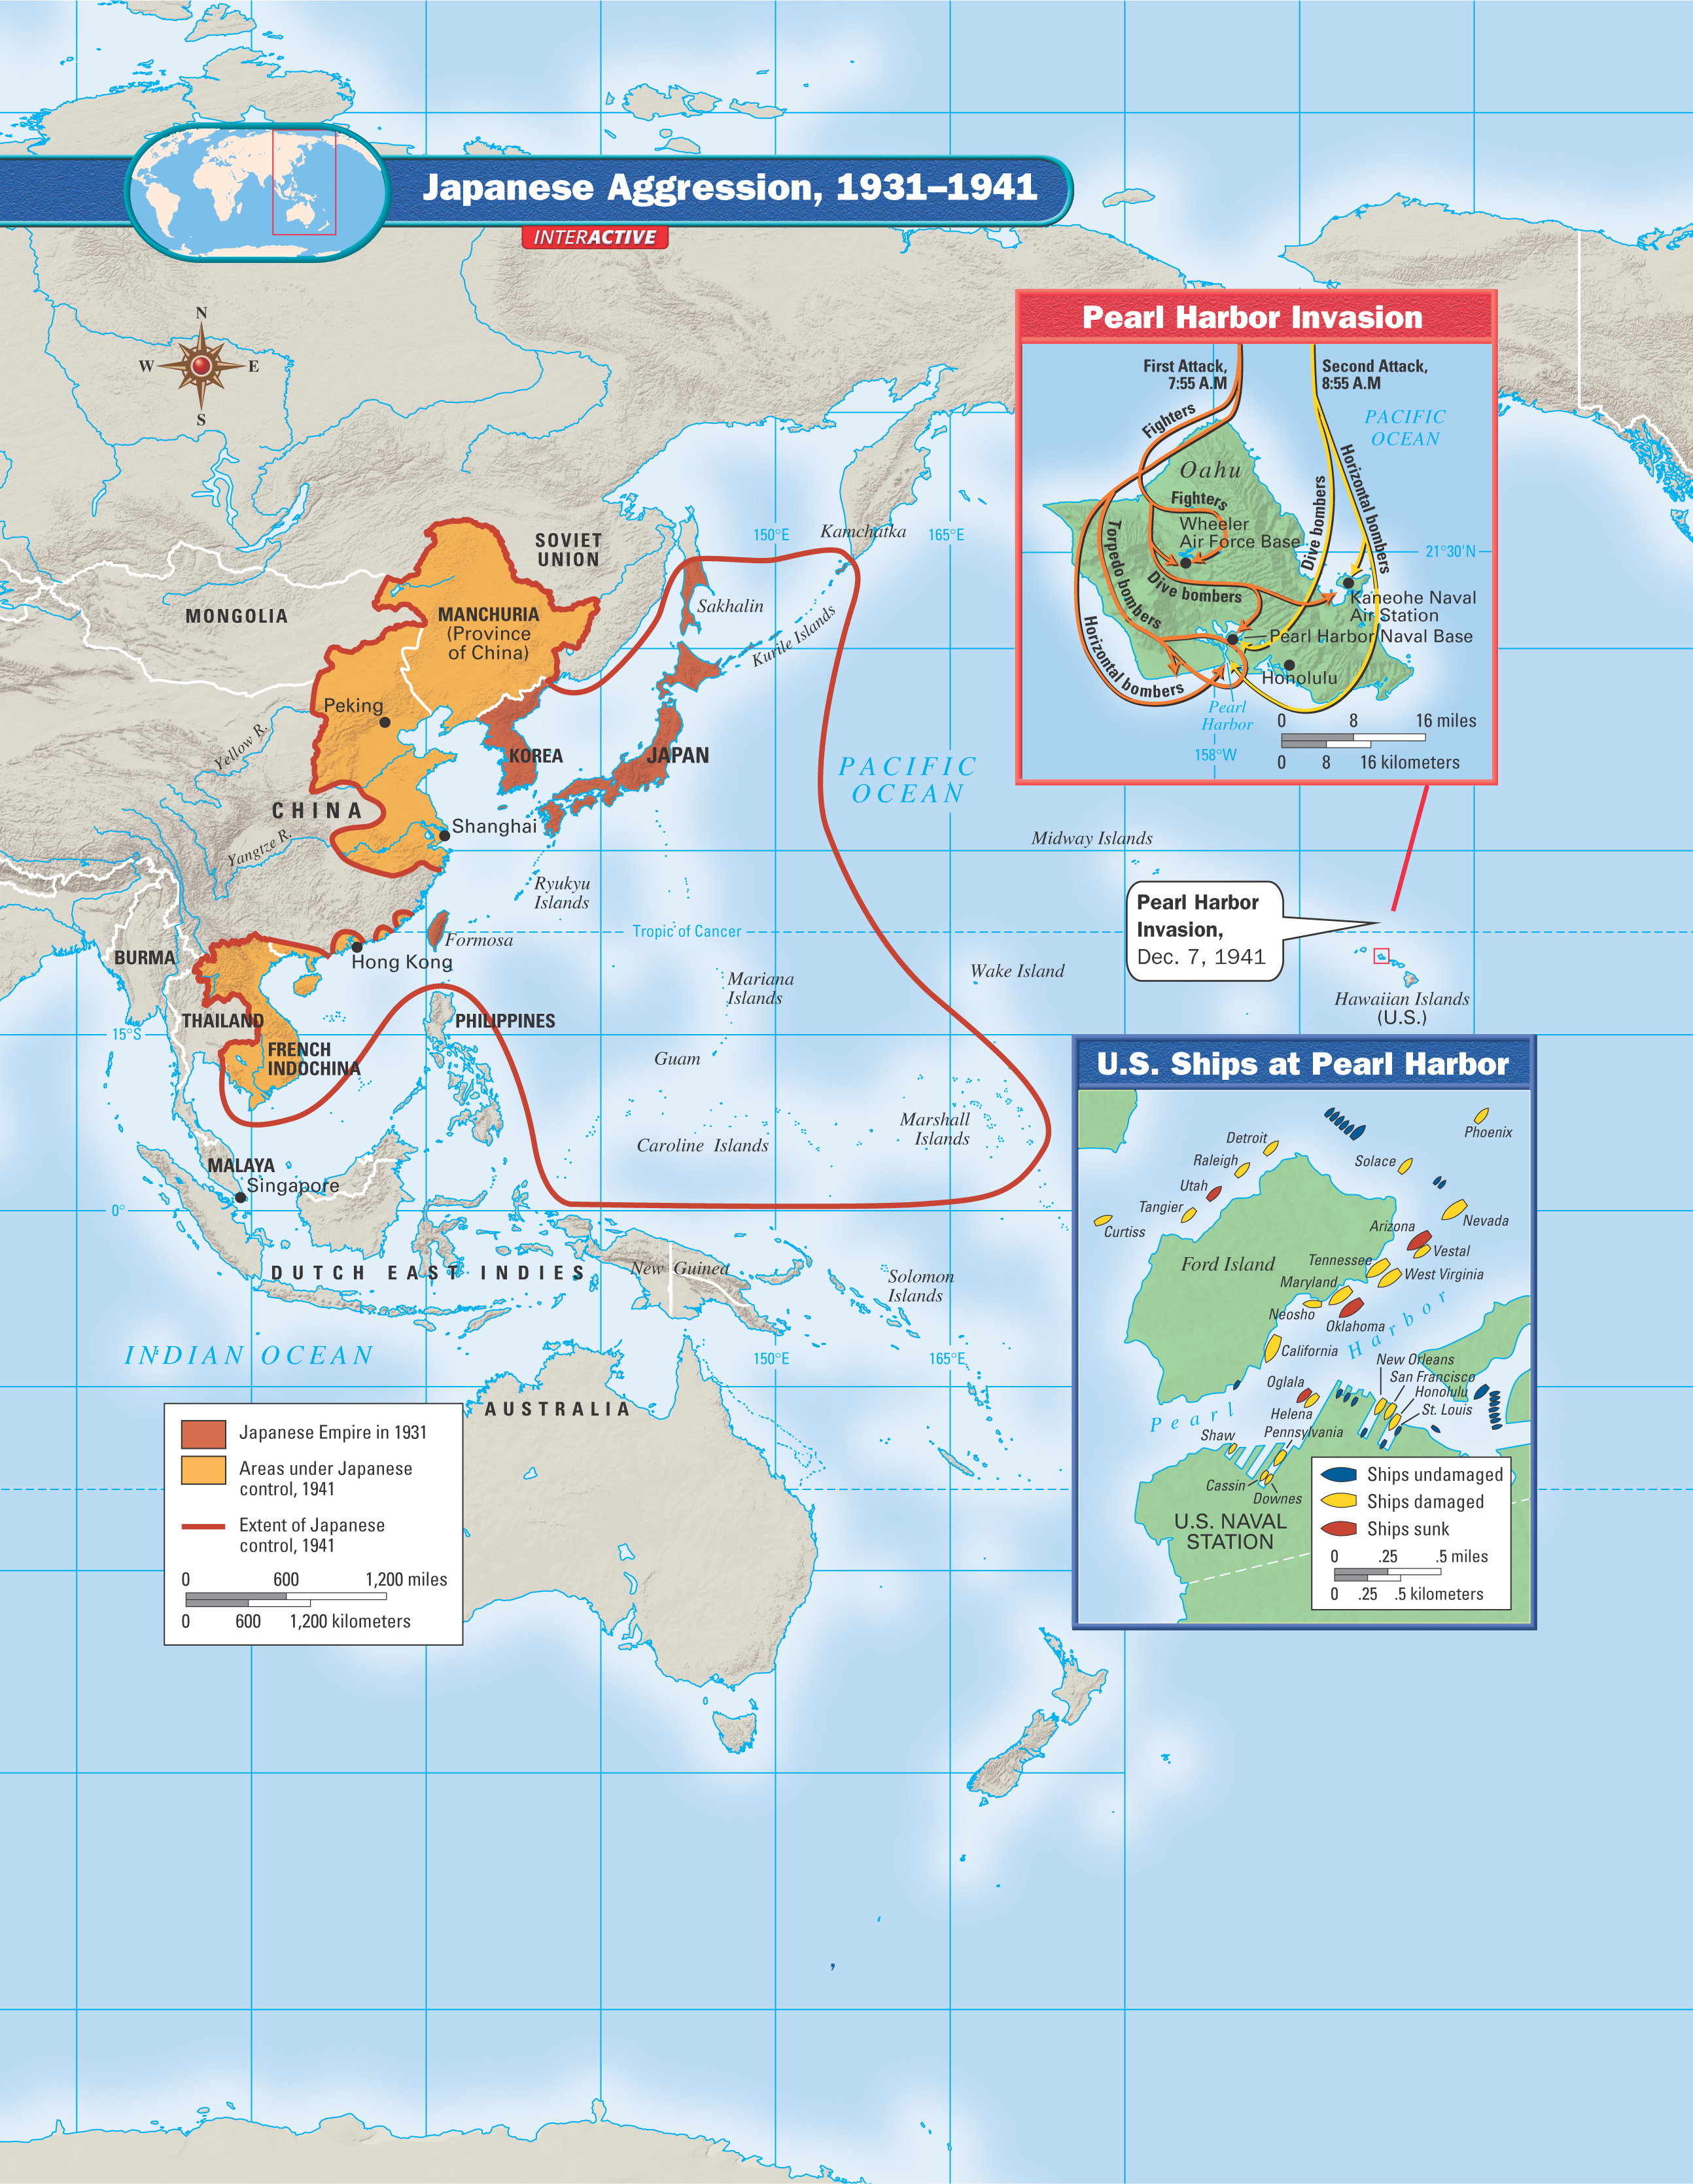 Maps: Japanese Aggression 1931 - 1941, Pearl Harbor Invasion, and U.S. Ships at Pearl Harbor